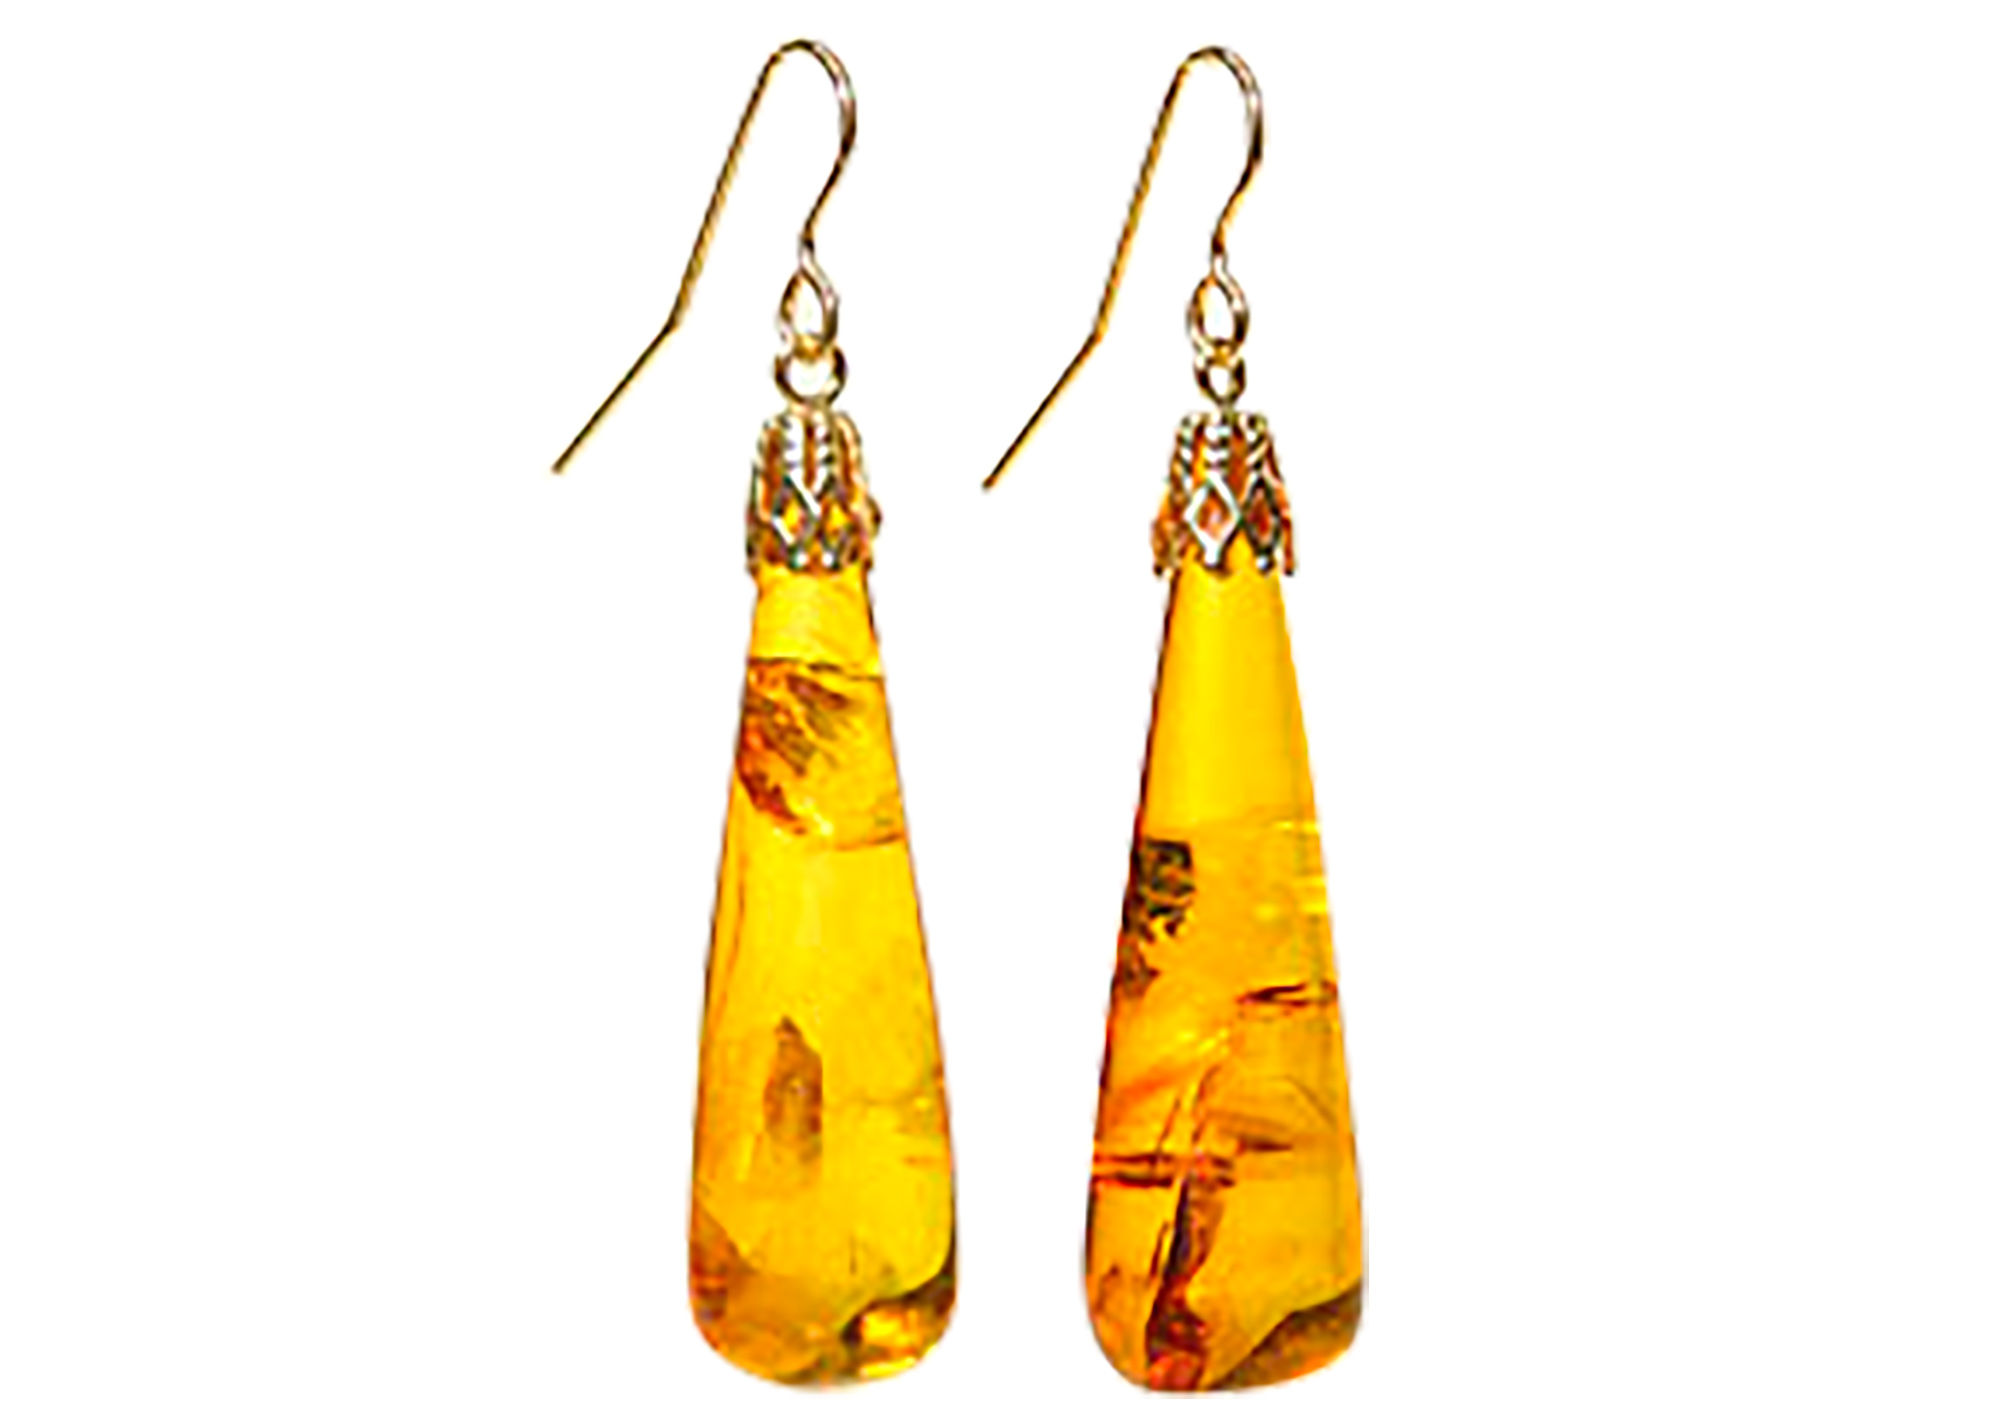 Buy Teardrop Amber Earrings at GoldenCockerel.com